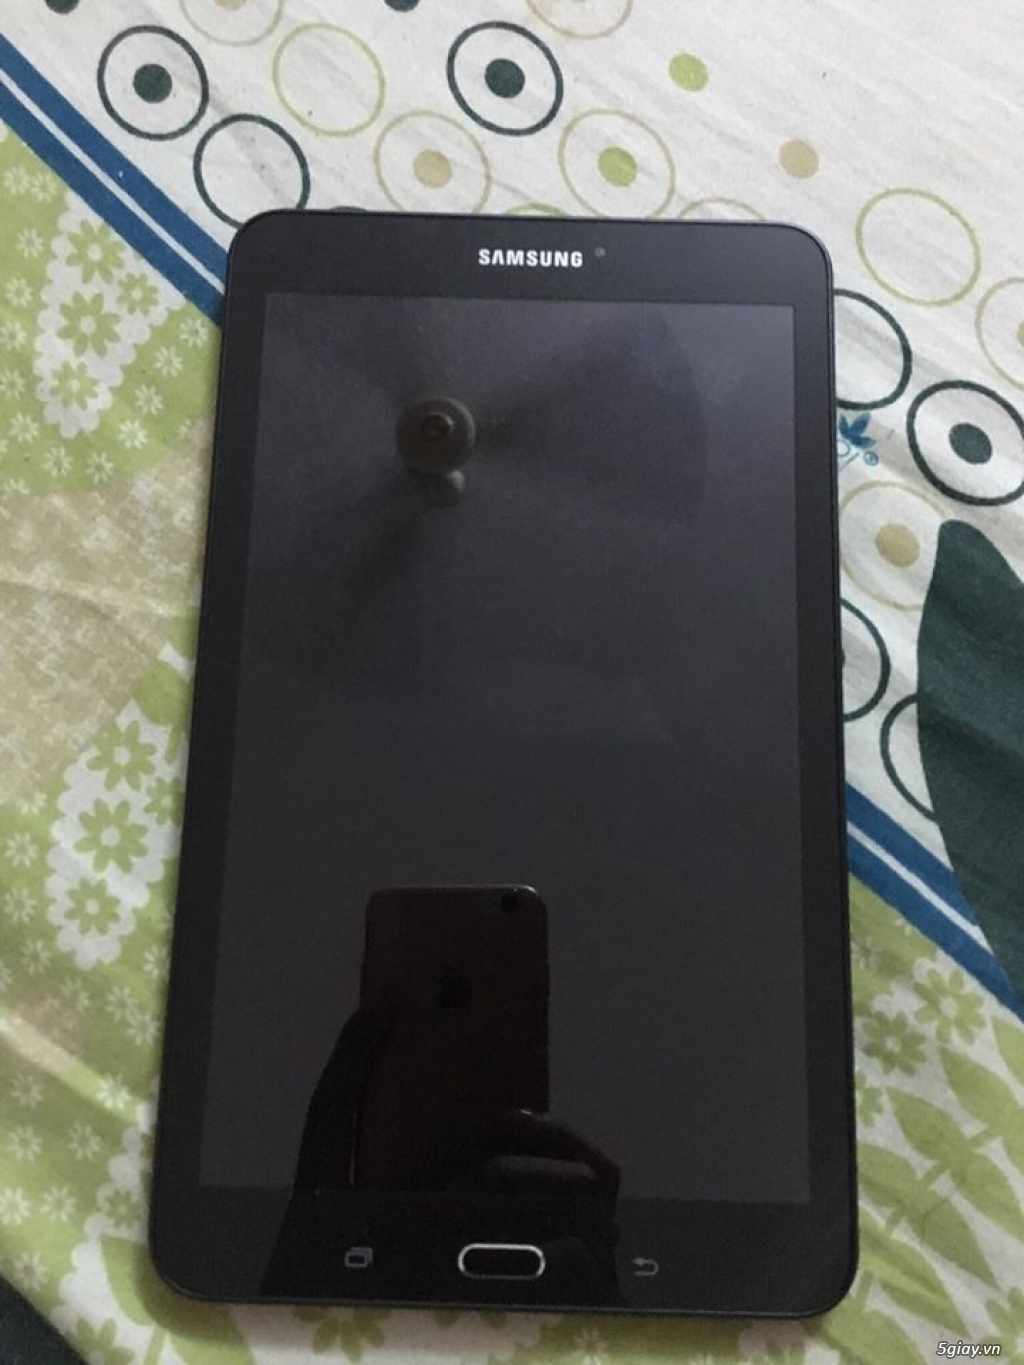 Bán Samsung Galaxy Tab E New 100% giá cực tốt - 2